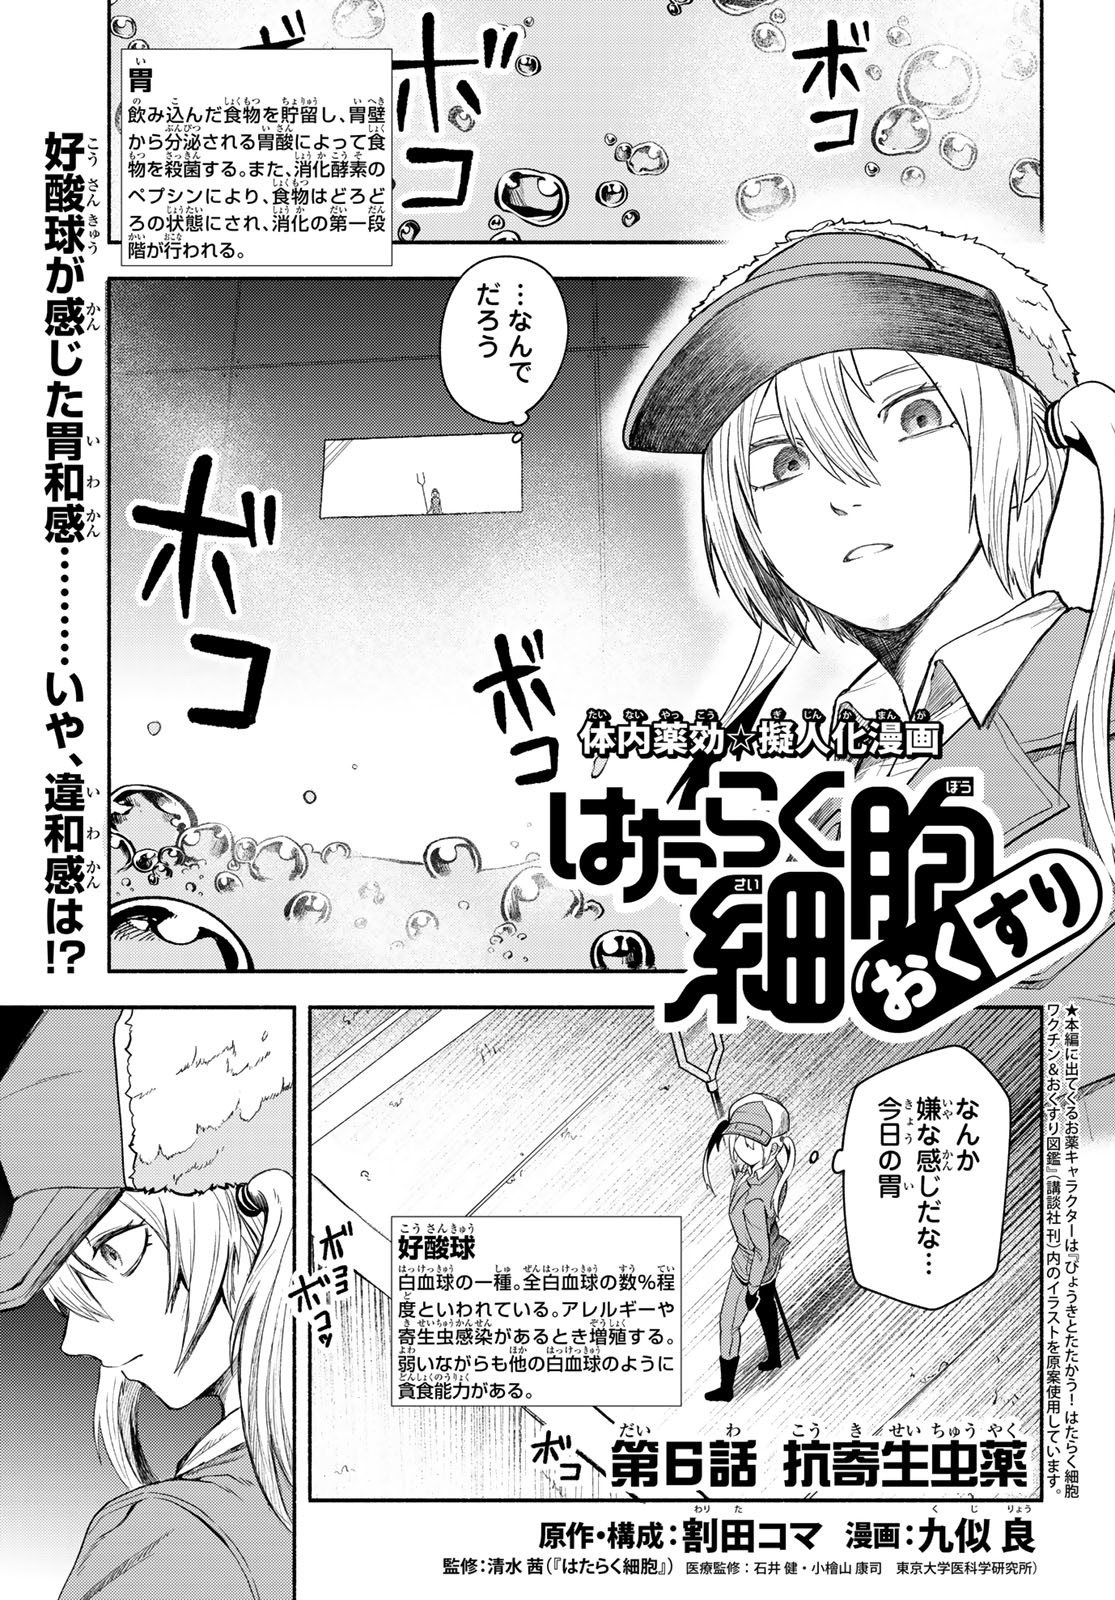 Hataraku Saibou Okusuri - Chapter 6 - Page 1